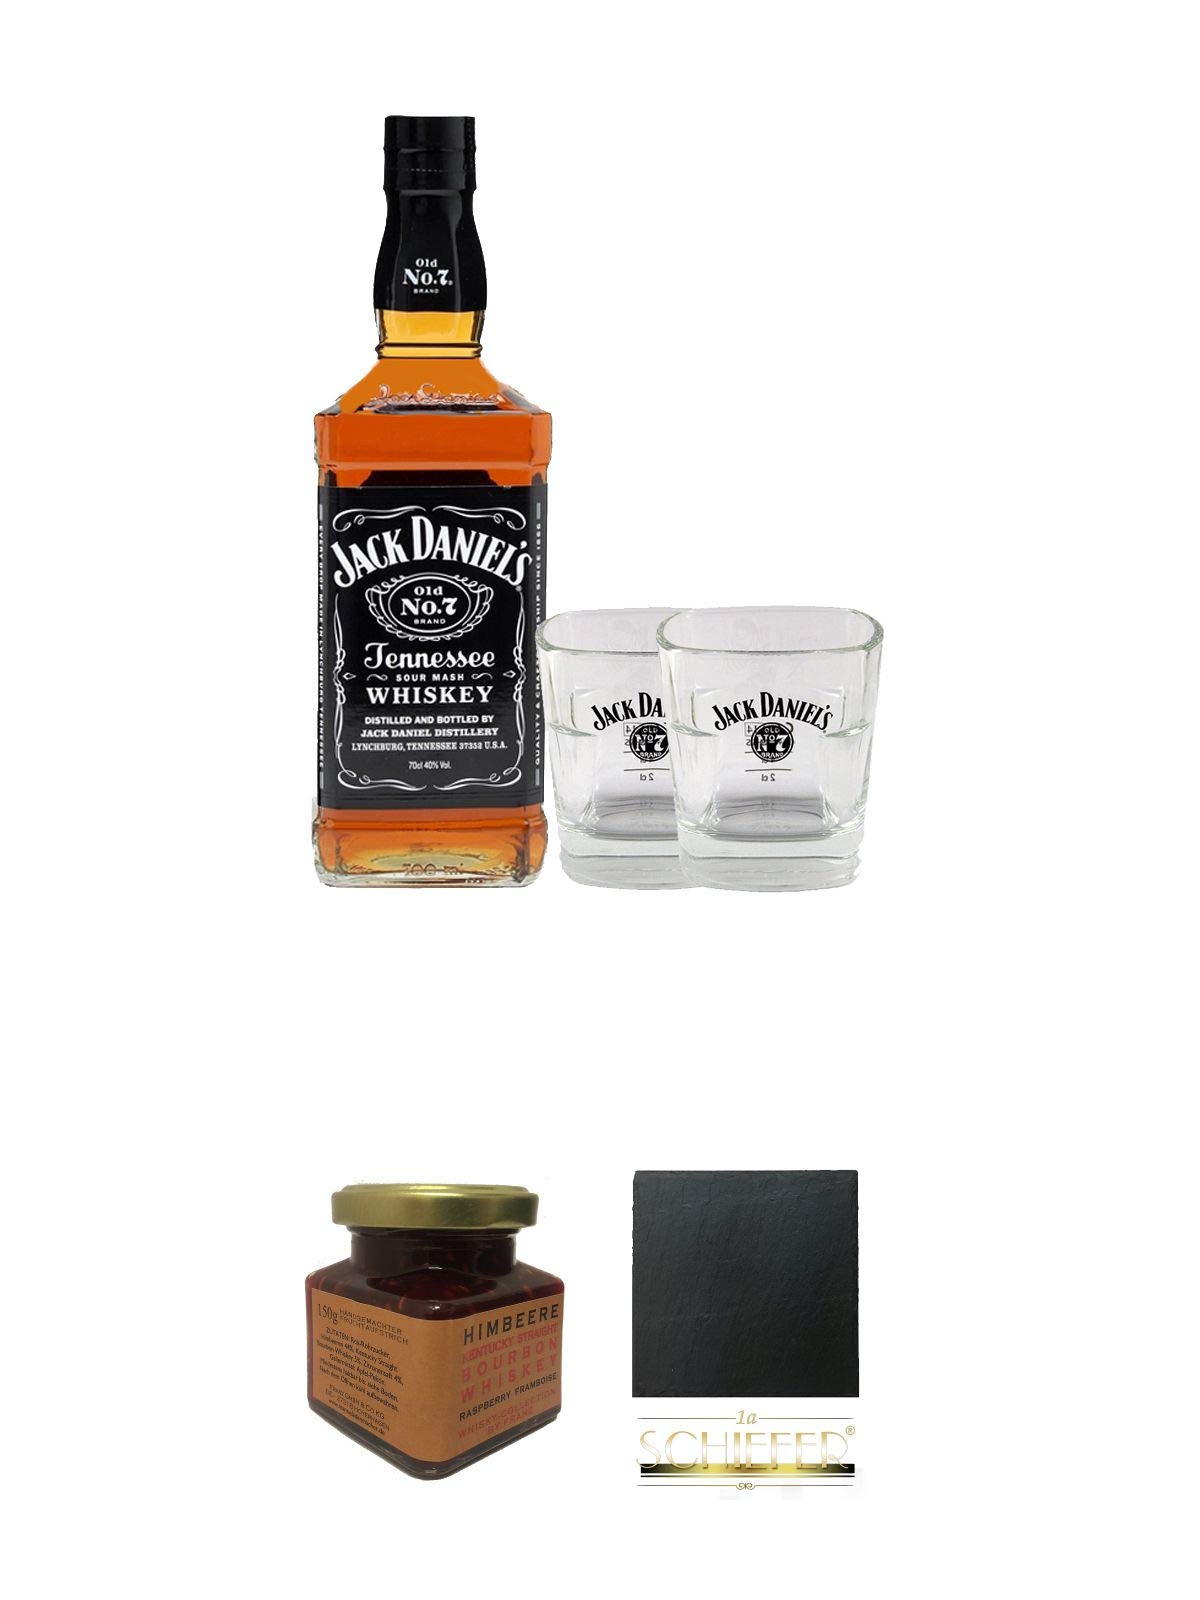 Jack Daniels Black Label No. 7-0,7 Liter + 2 x Jack Daniels Gläser + Kentucky Bourbon Himbeer-Marmelade 150 Gramm Glas + Schiefer Glasuntersetzer eckig ca. 9,5 cm Durchmesser